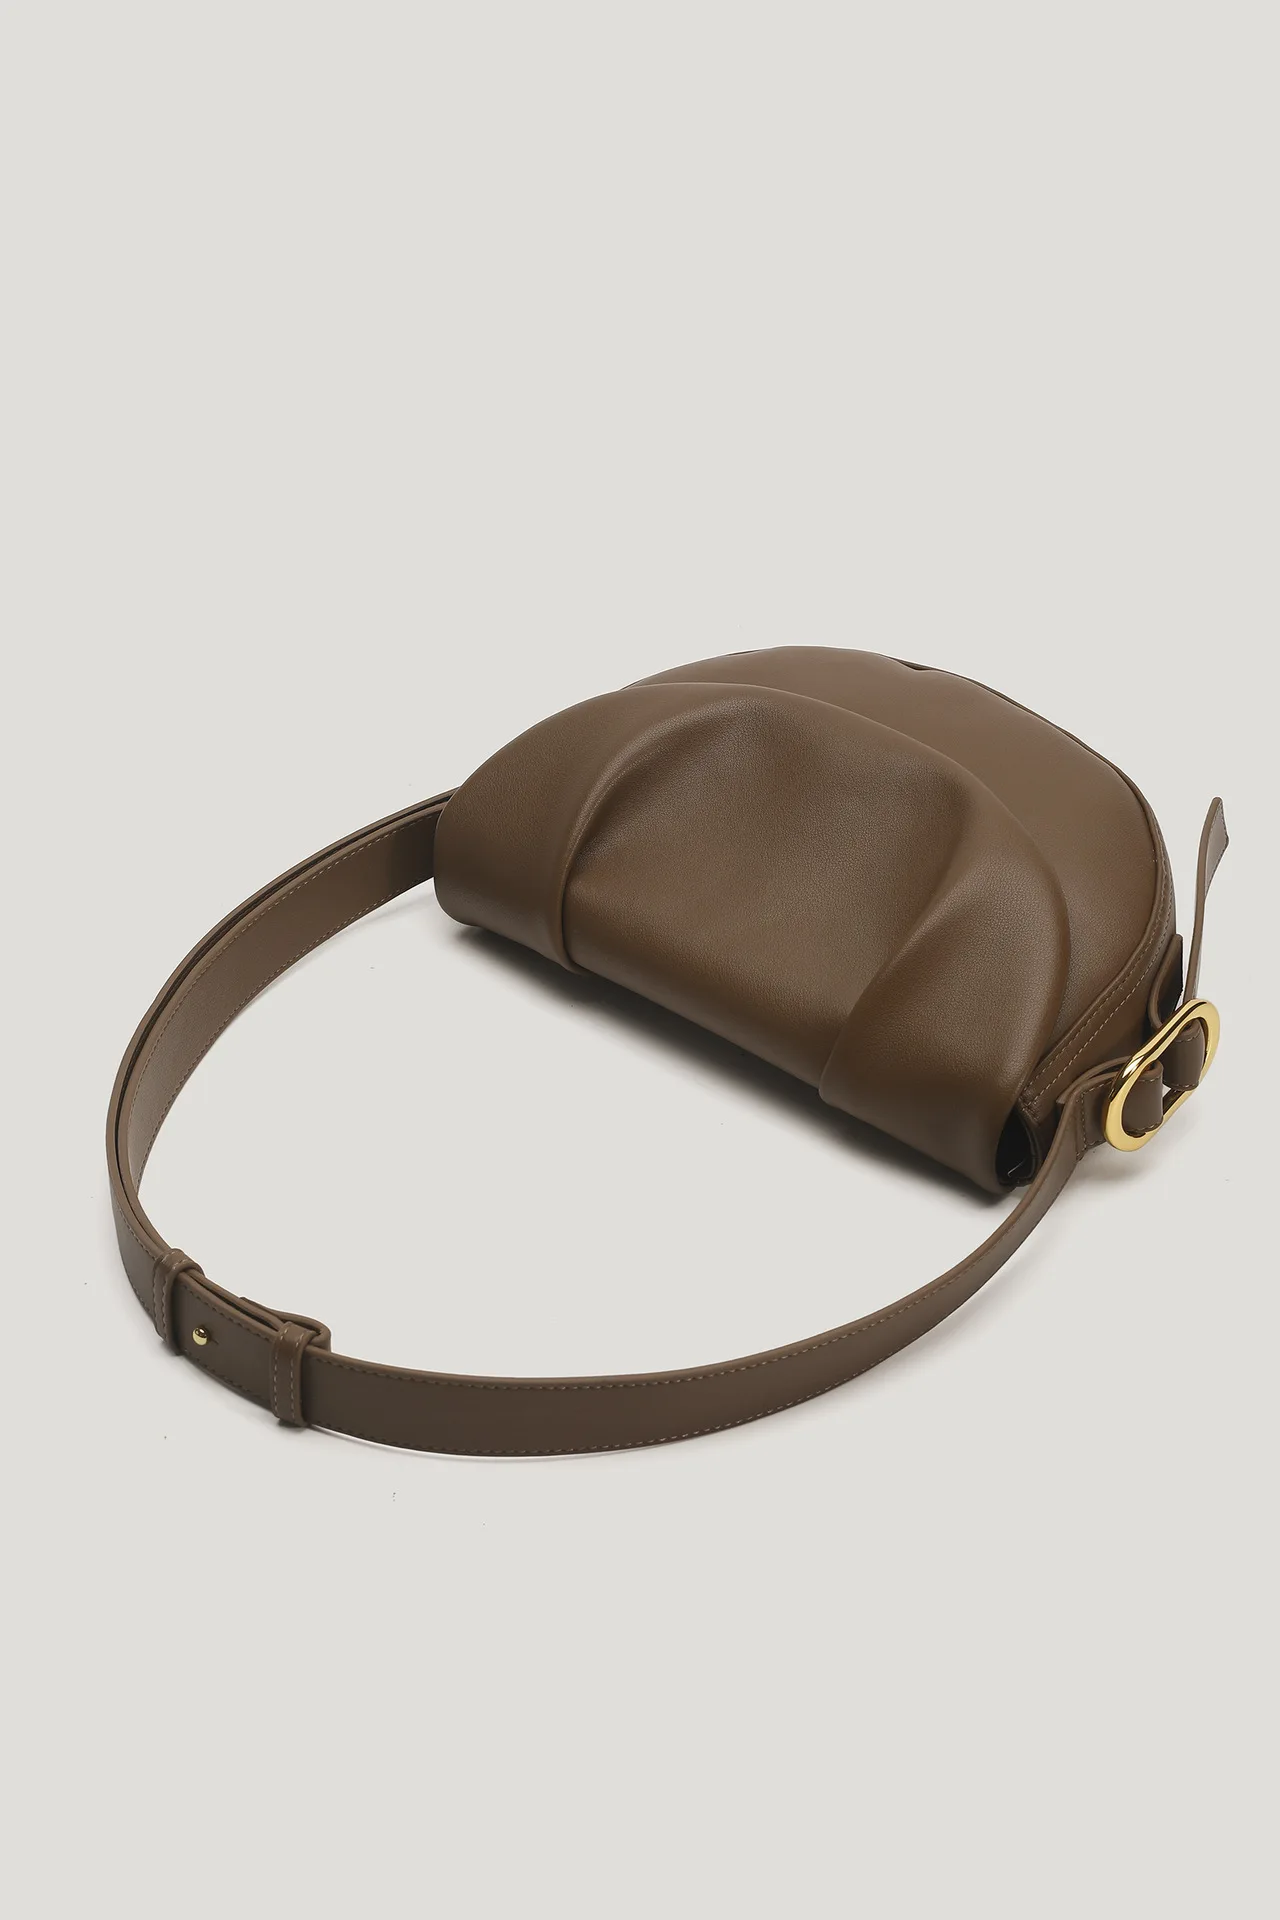 Designer Clutch Bag for Women Genuine Leather Underarm Bag Small Purse with Zipper Closure Cowhide Gril Tote Handbag